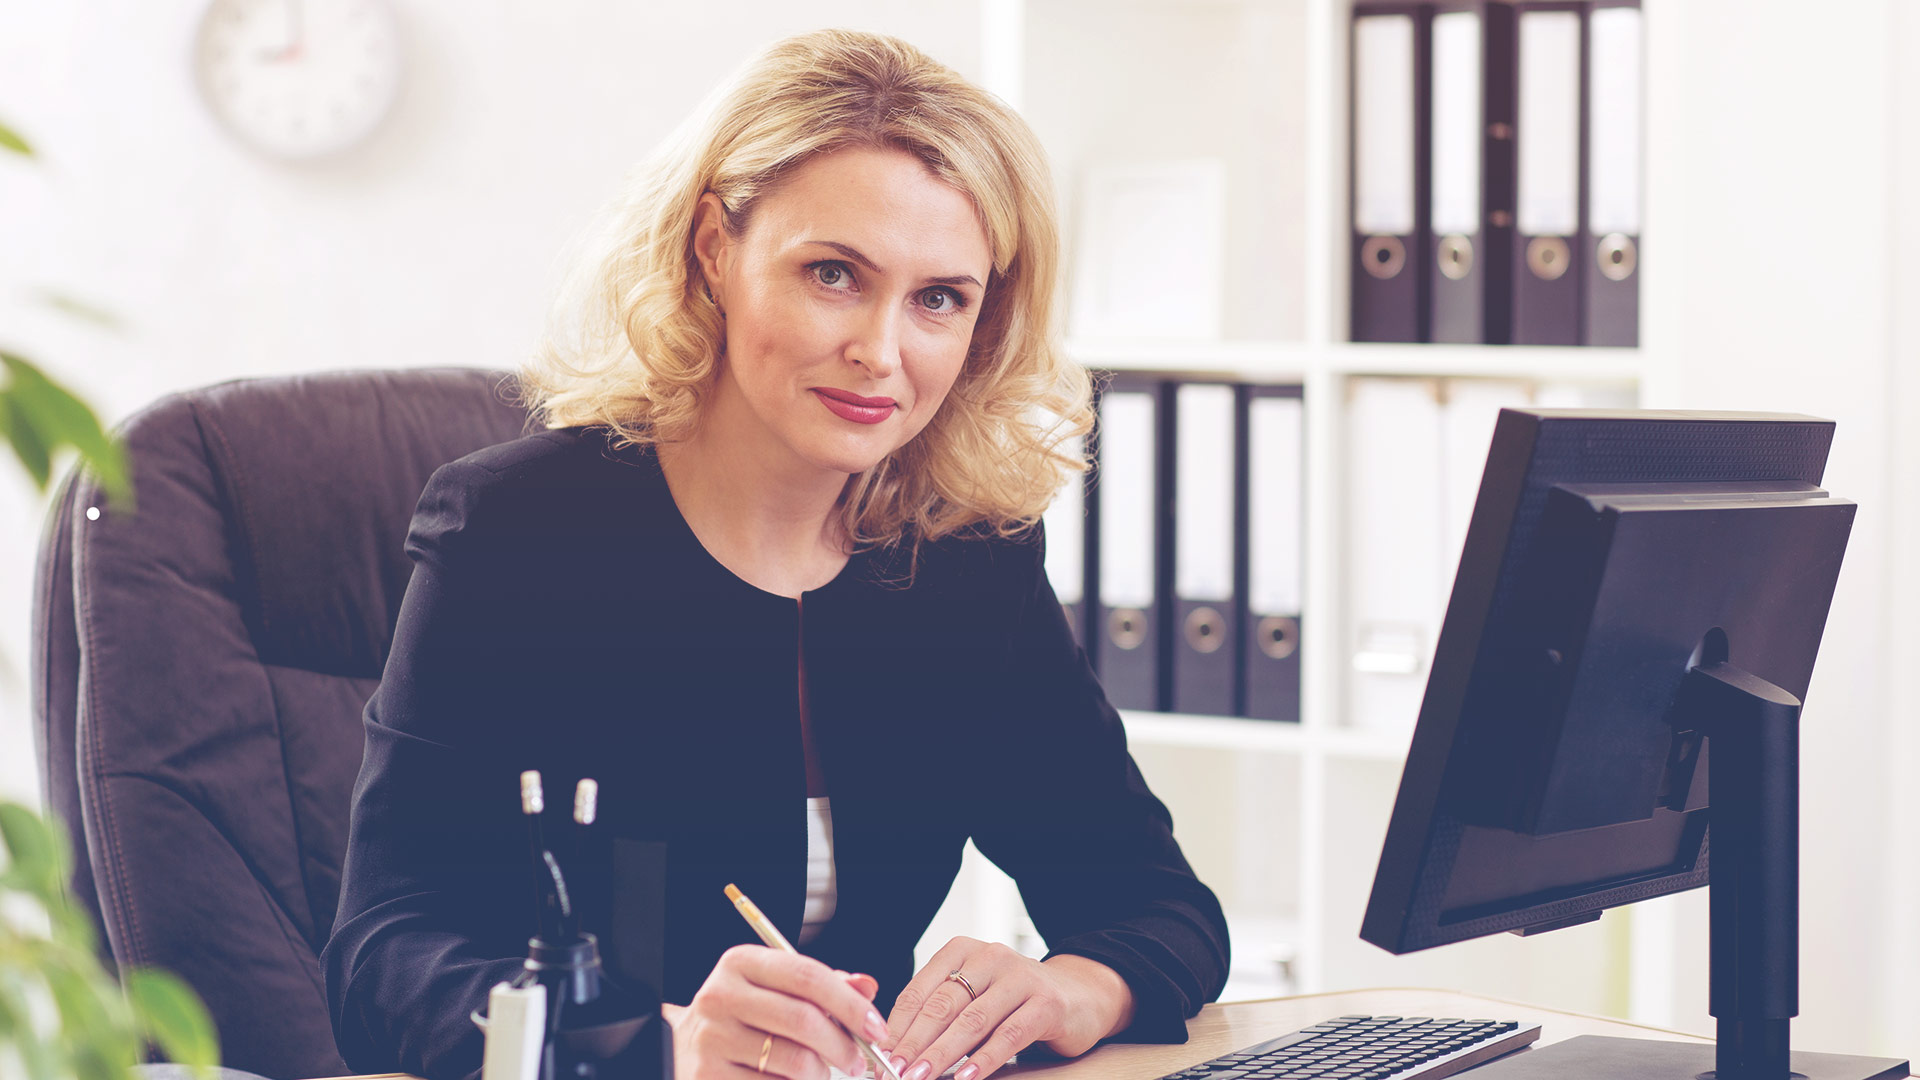 Professional woman sitting at desk smiling at camera